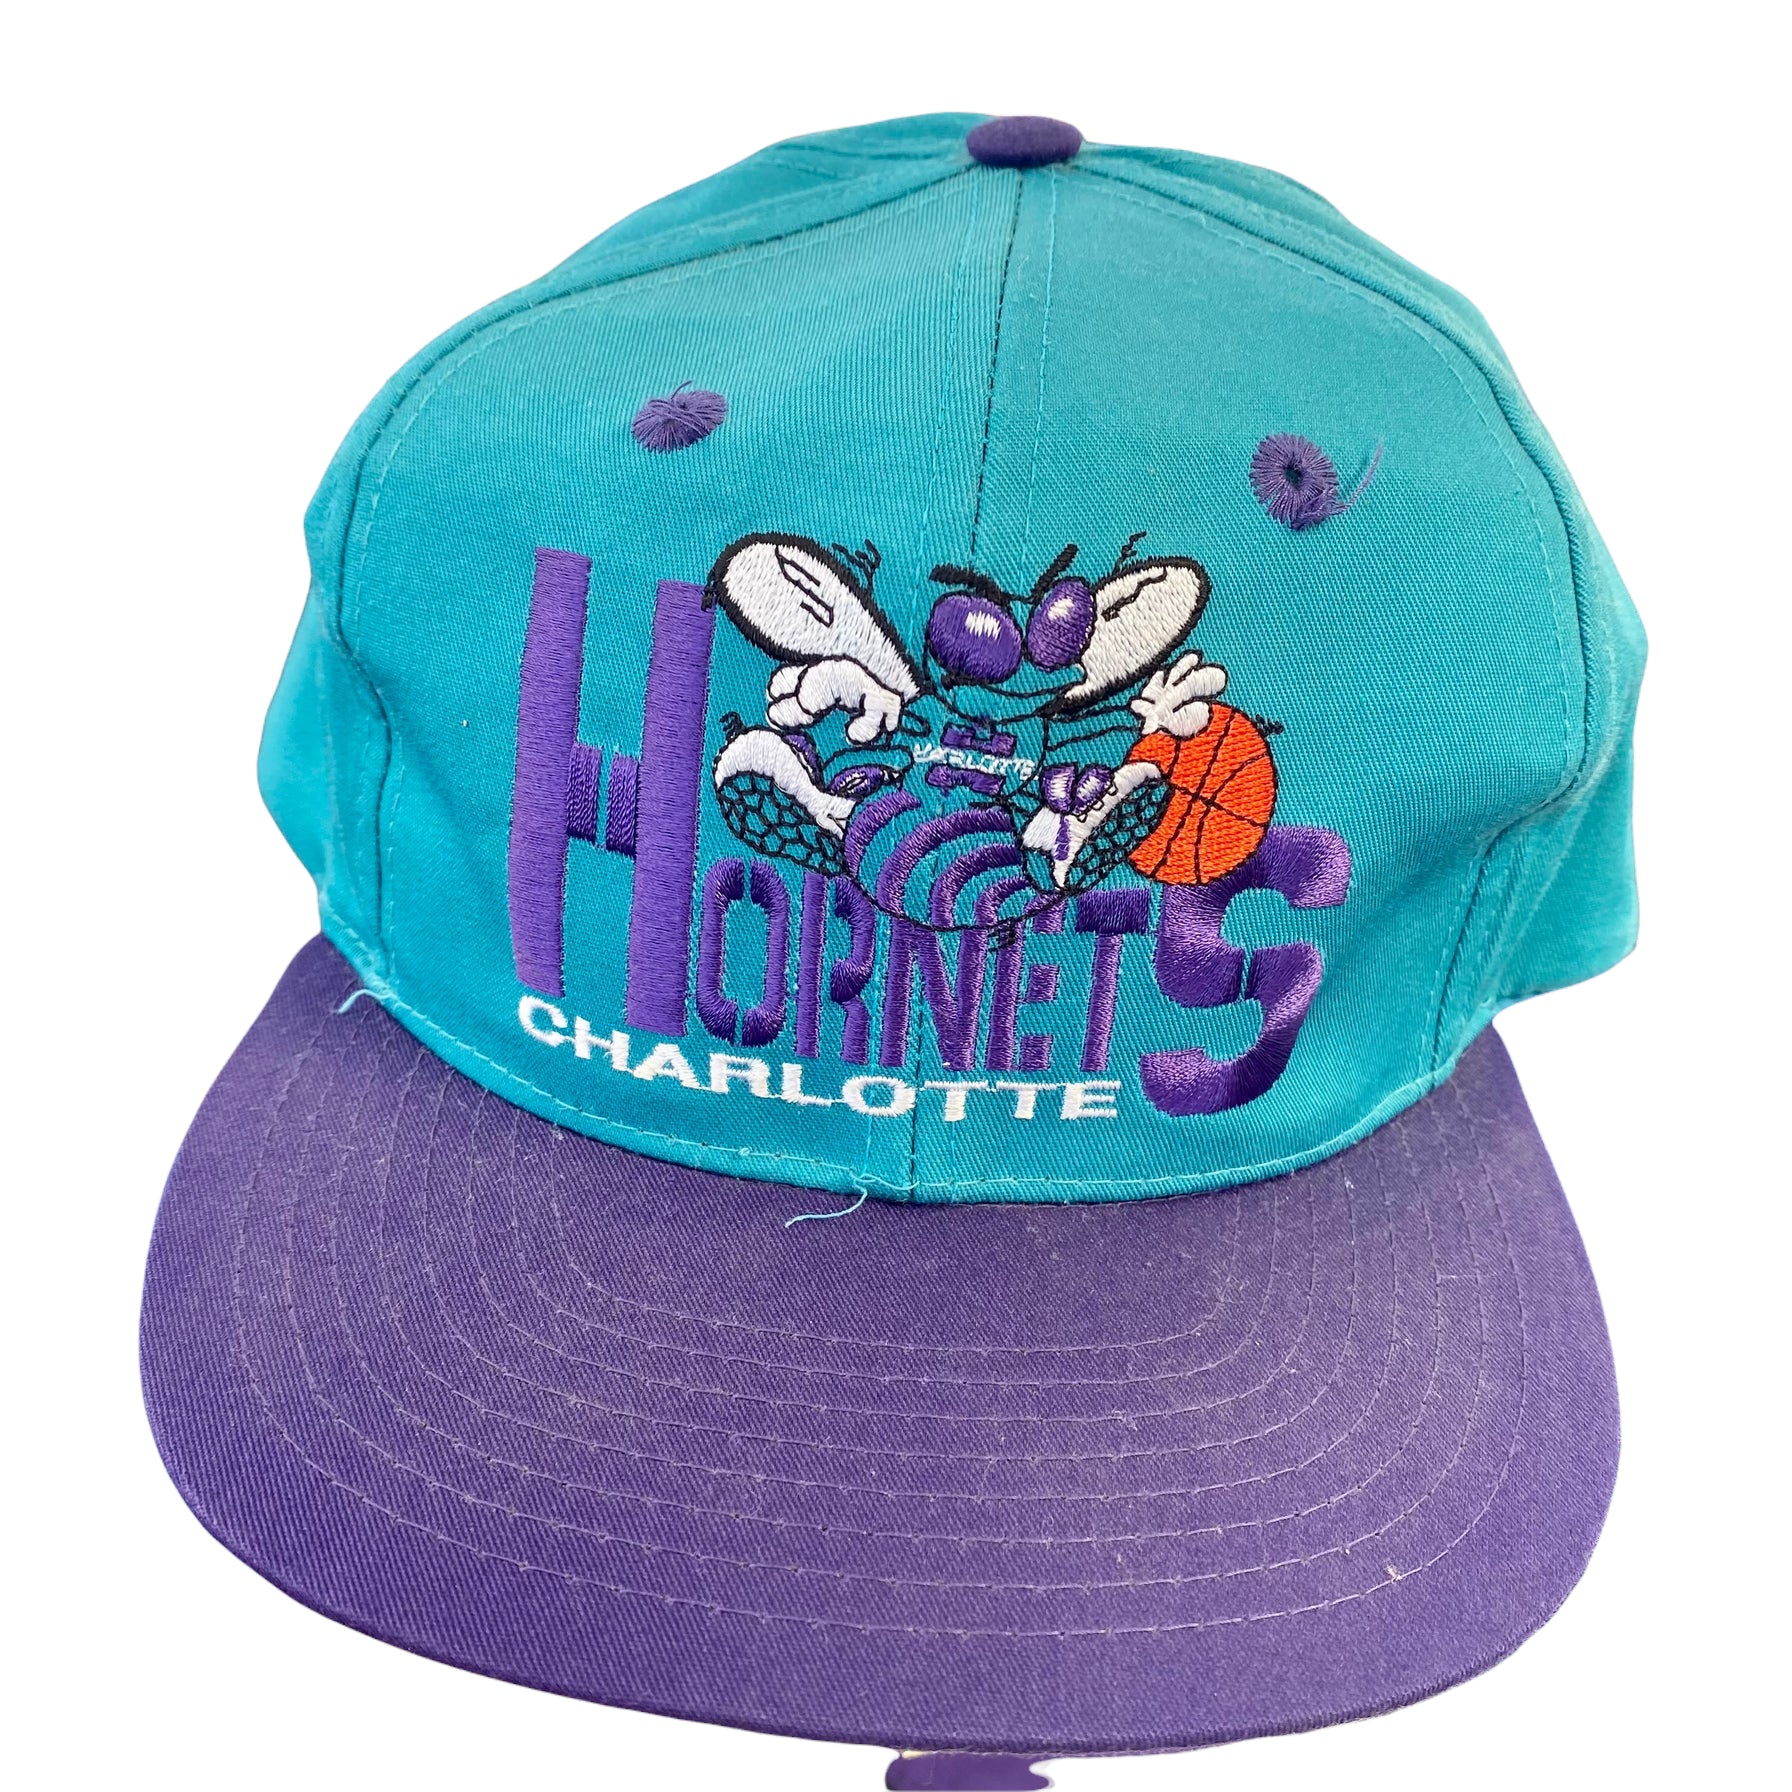 Vintage 90s Charlotte Hornets Cap 